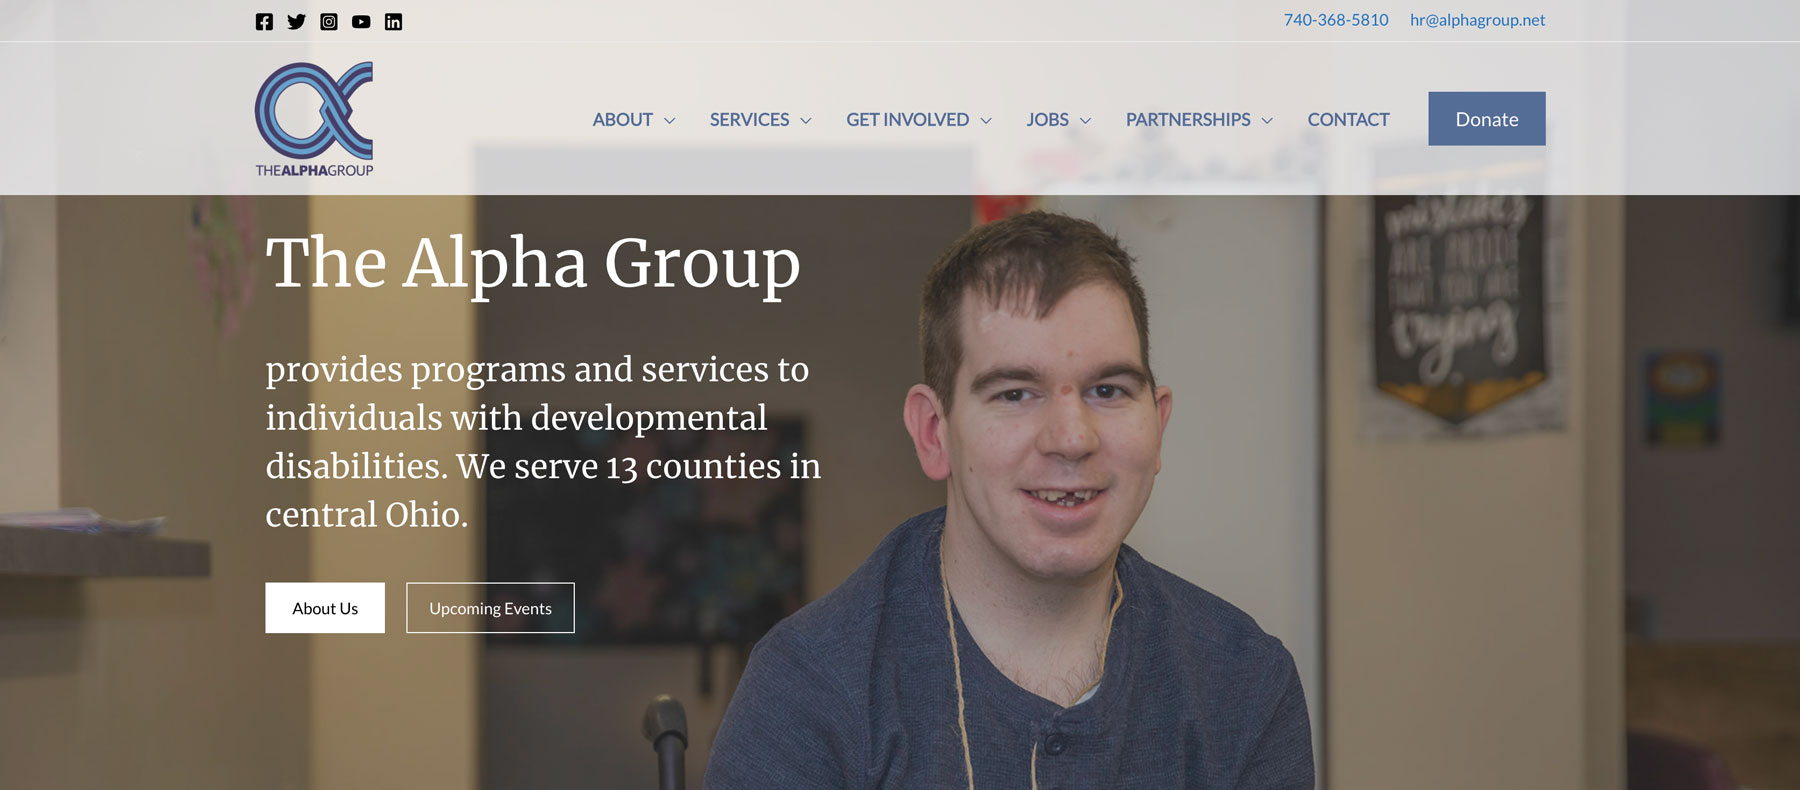 The Alpha Group website by Starburst Media